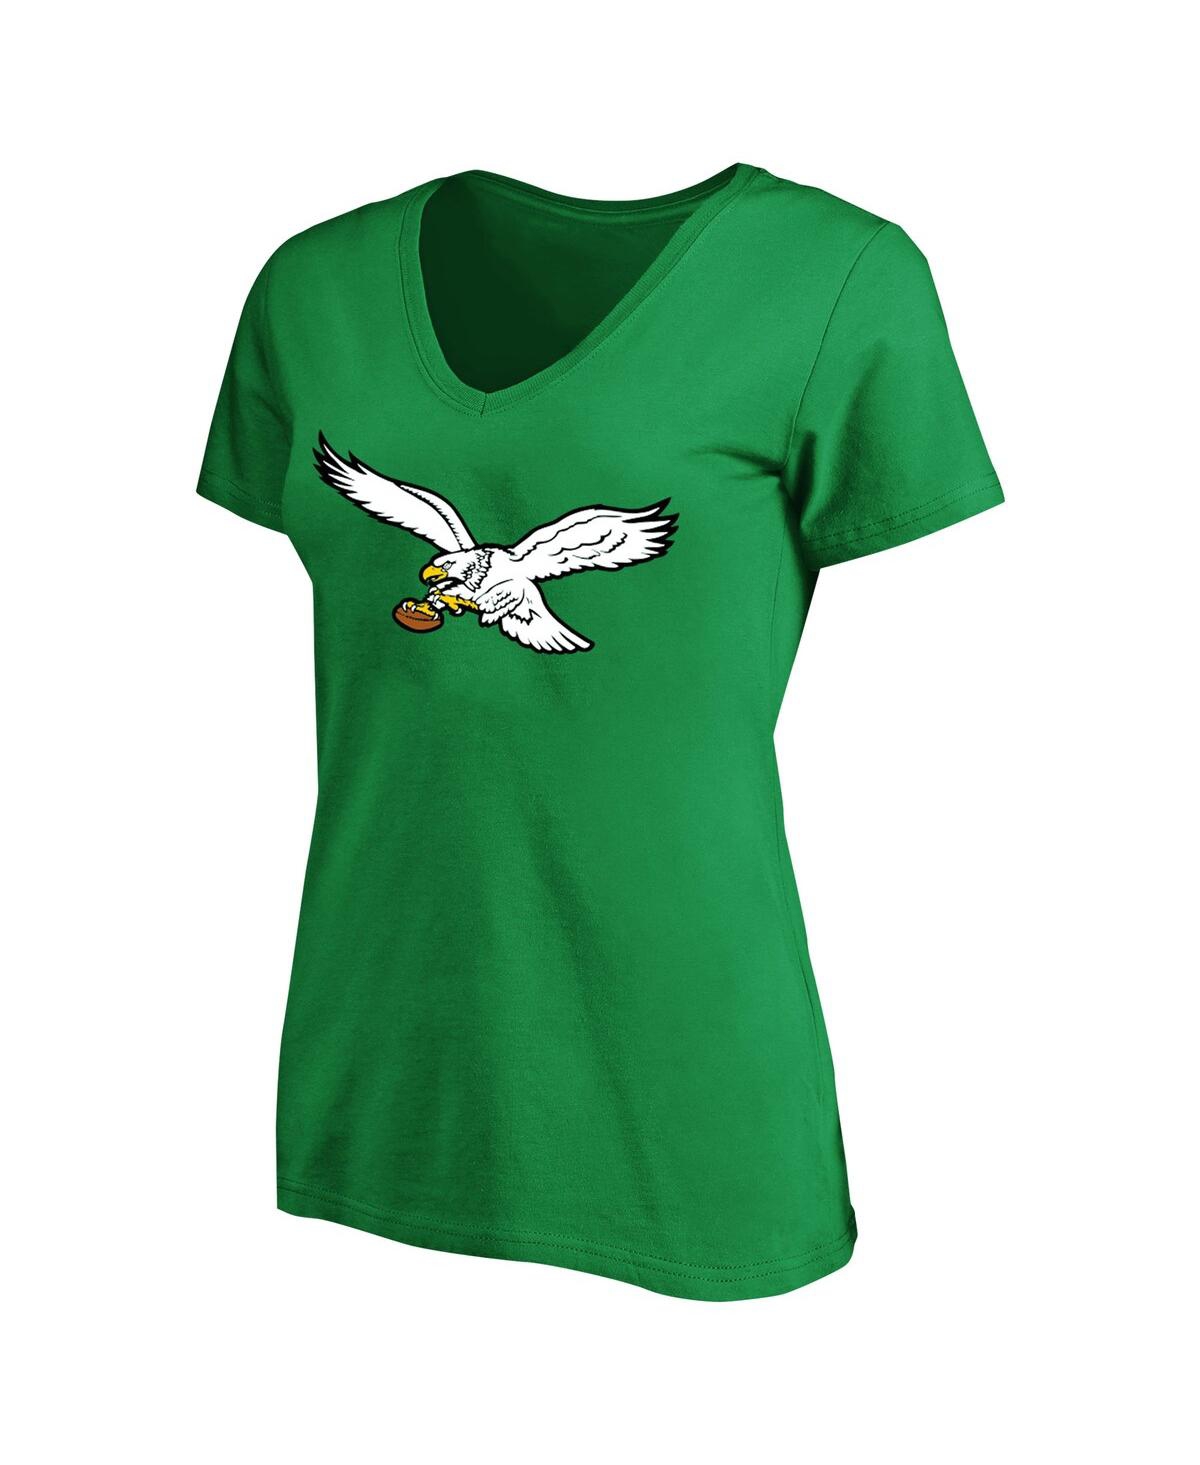 Women's Profile Kelly Green Distressed Philadelphia Eagles Plus Size Retro Logo T-shirt - Kelly Green